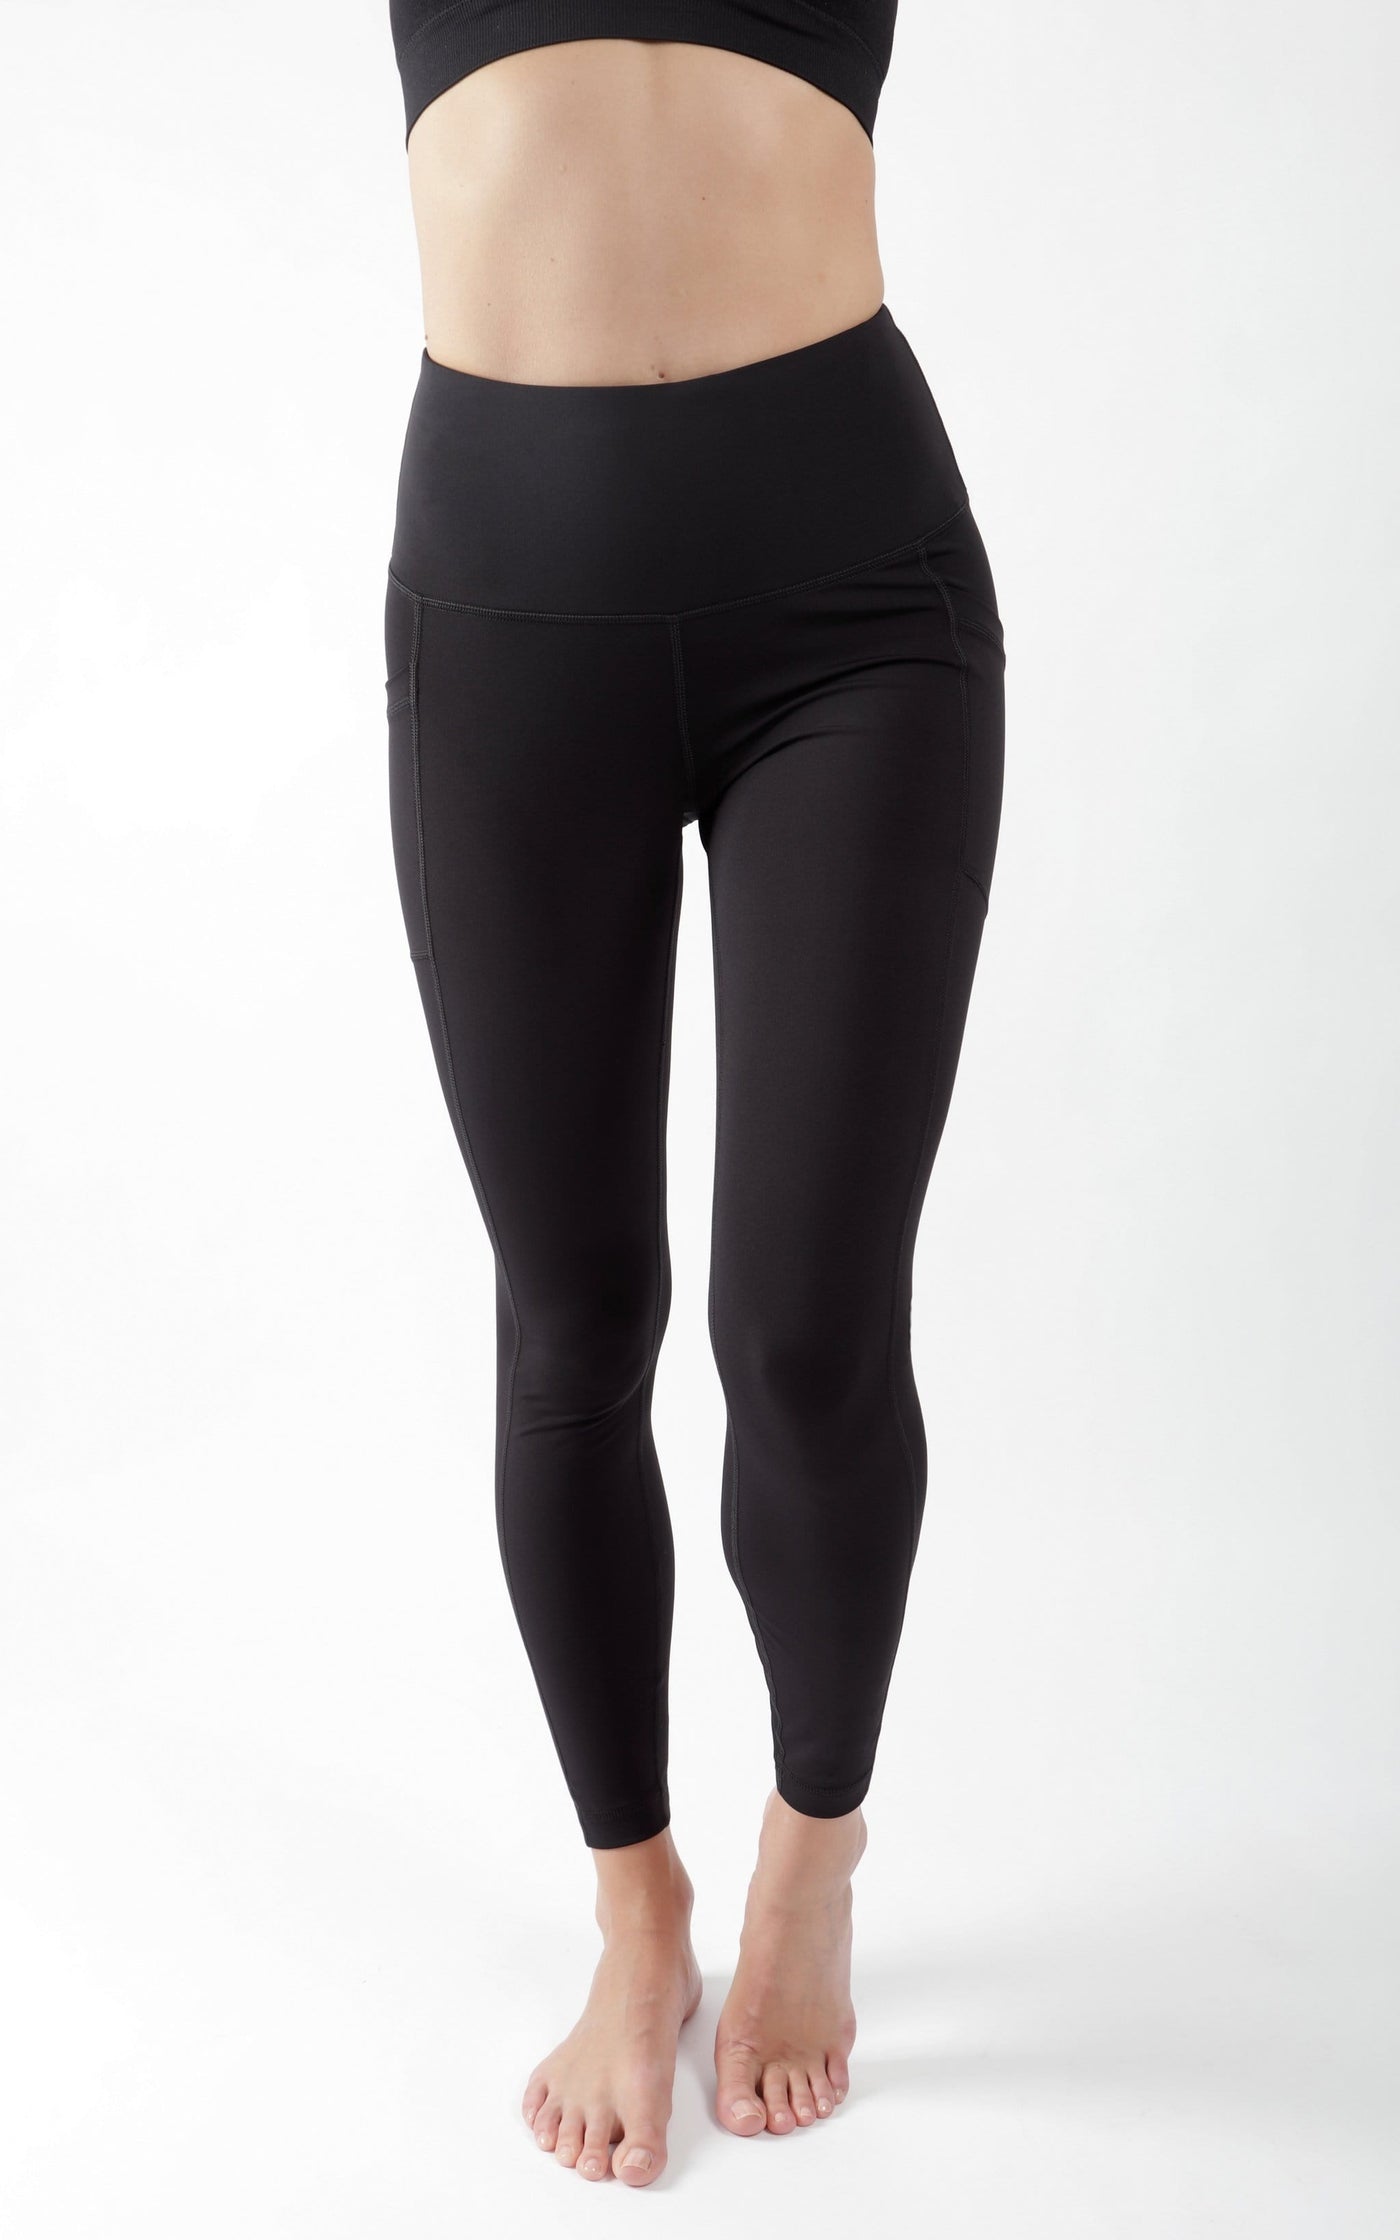 Women's Yoga Pants High Waisted Workout Leggings Squat Proof 7/8